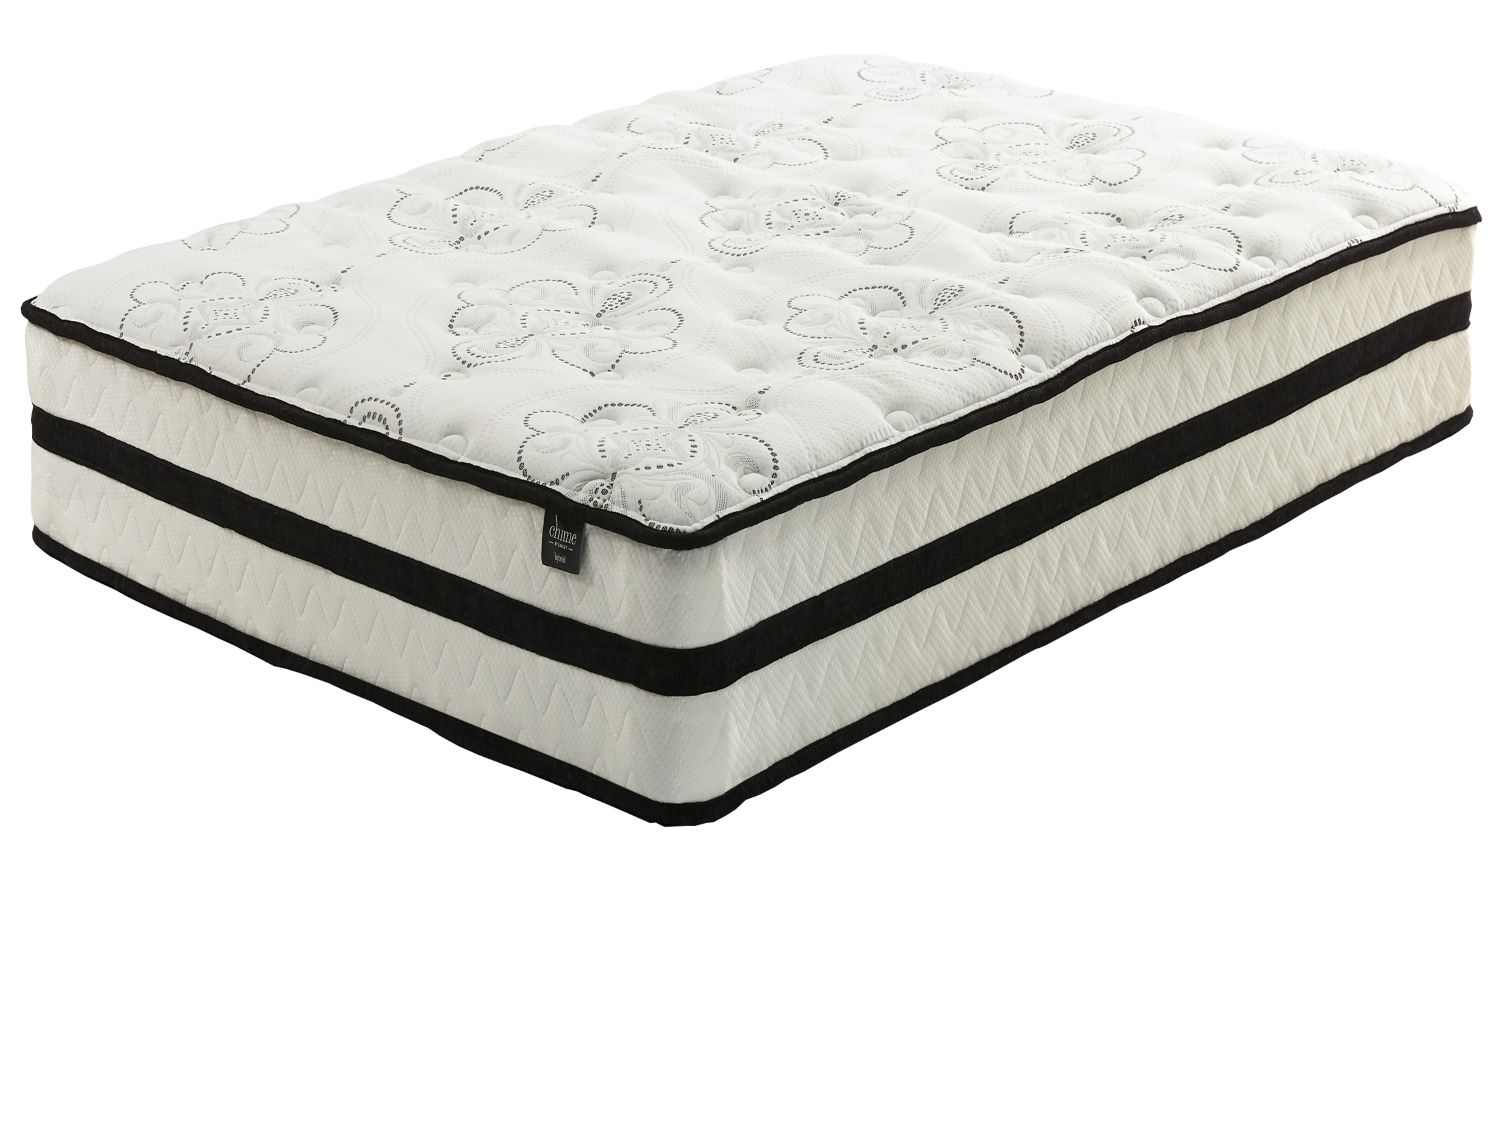 6 inch chime memory foam mattress twin